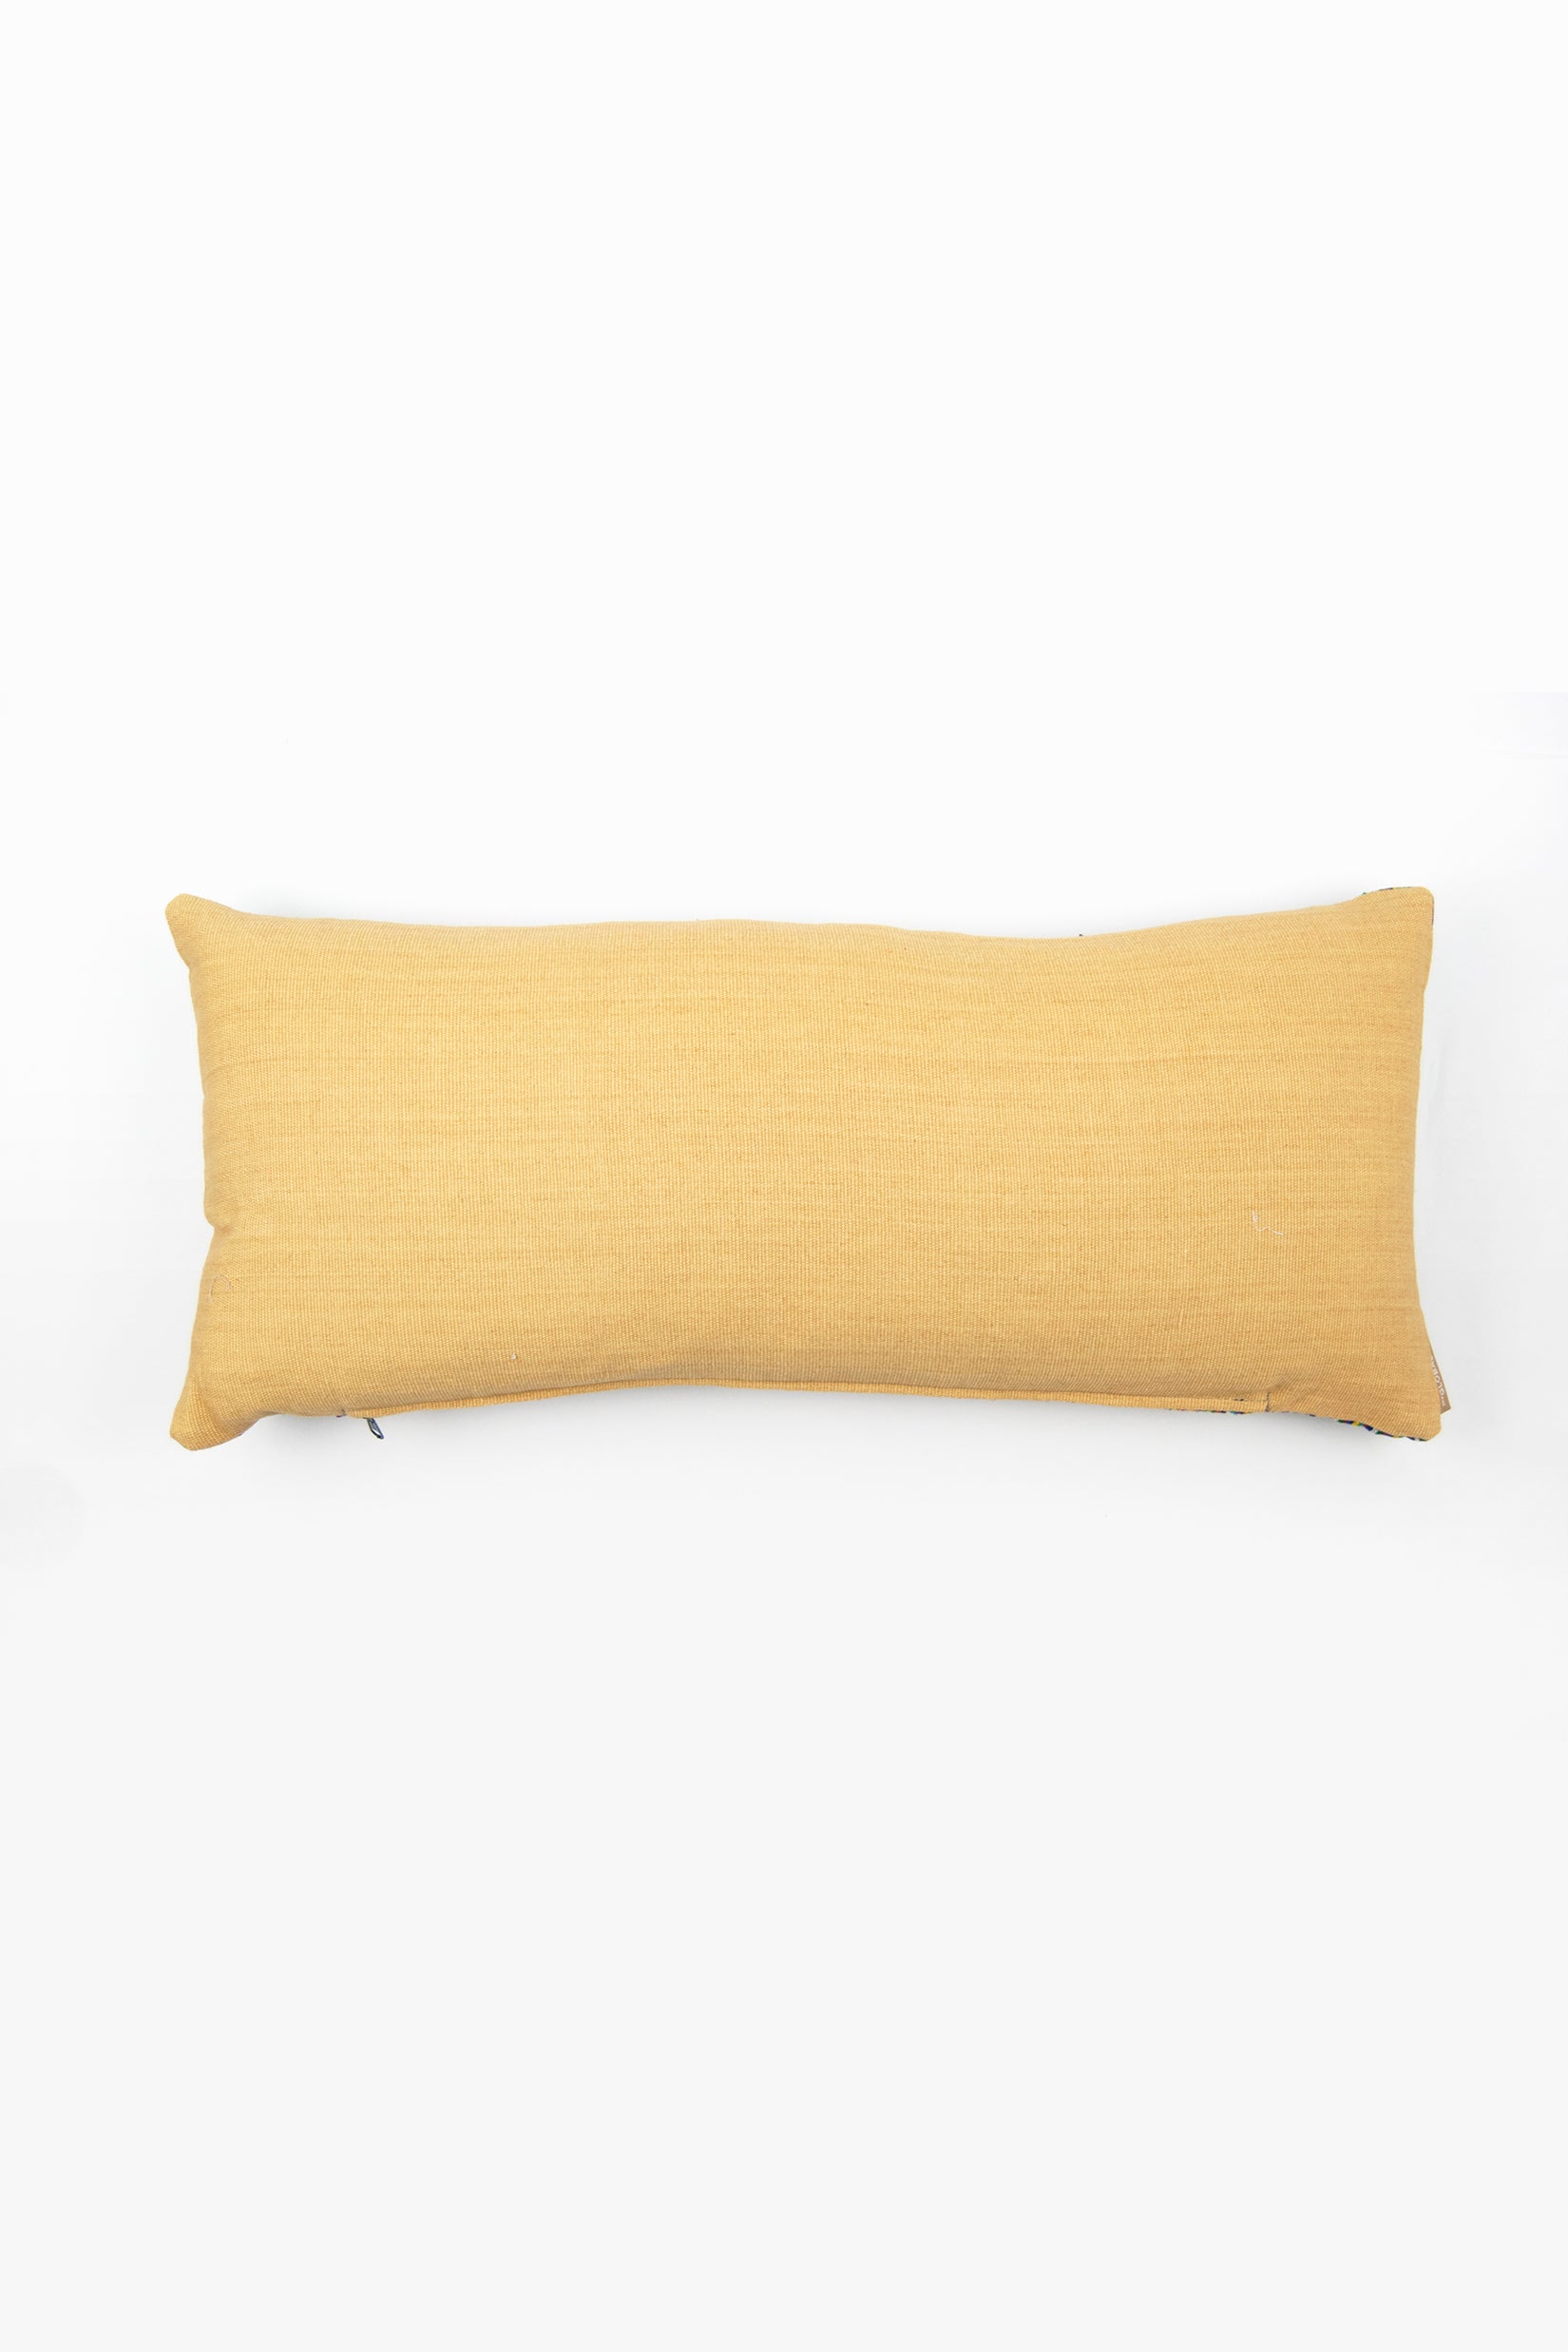 Maya Heirloom Pillow No. 892